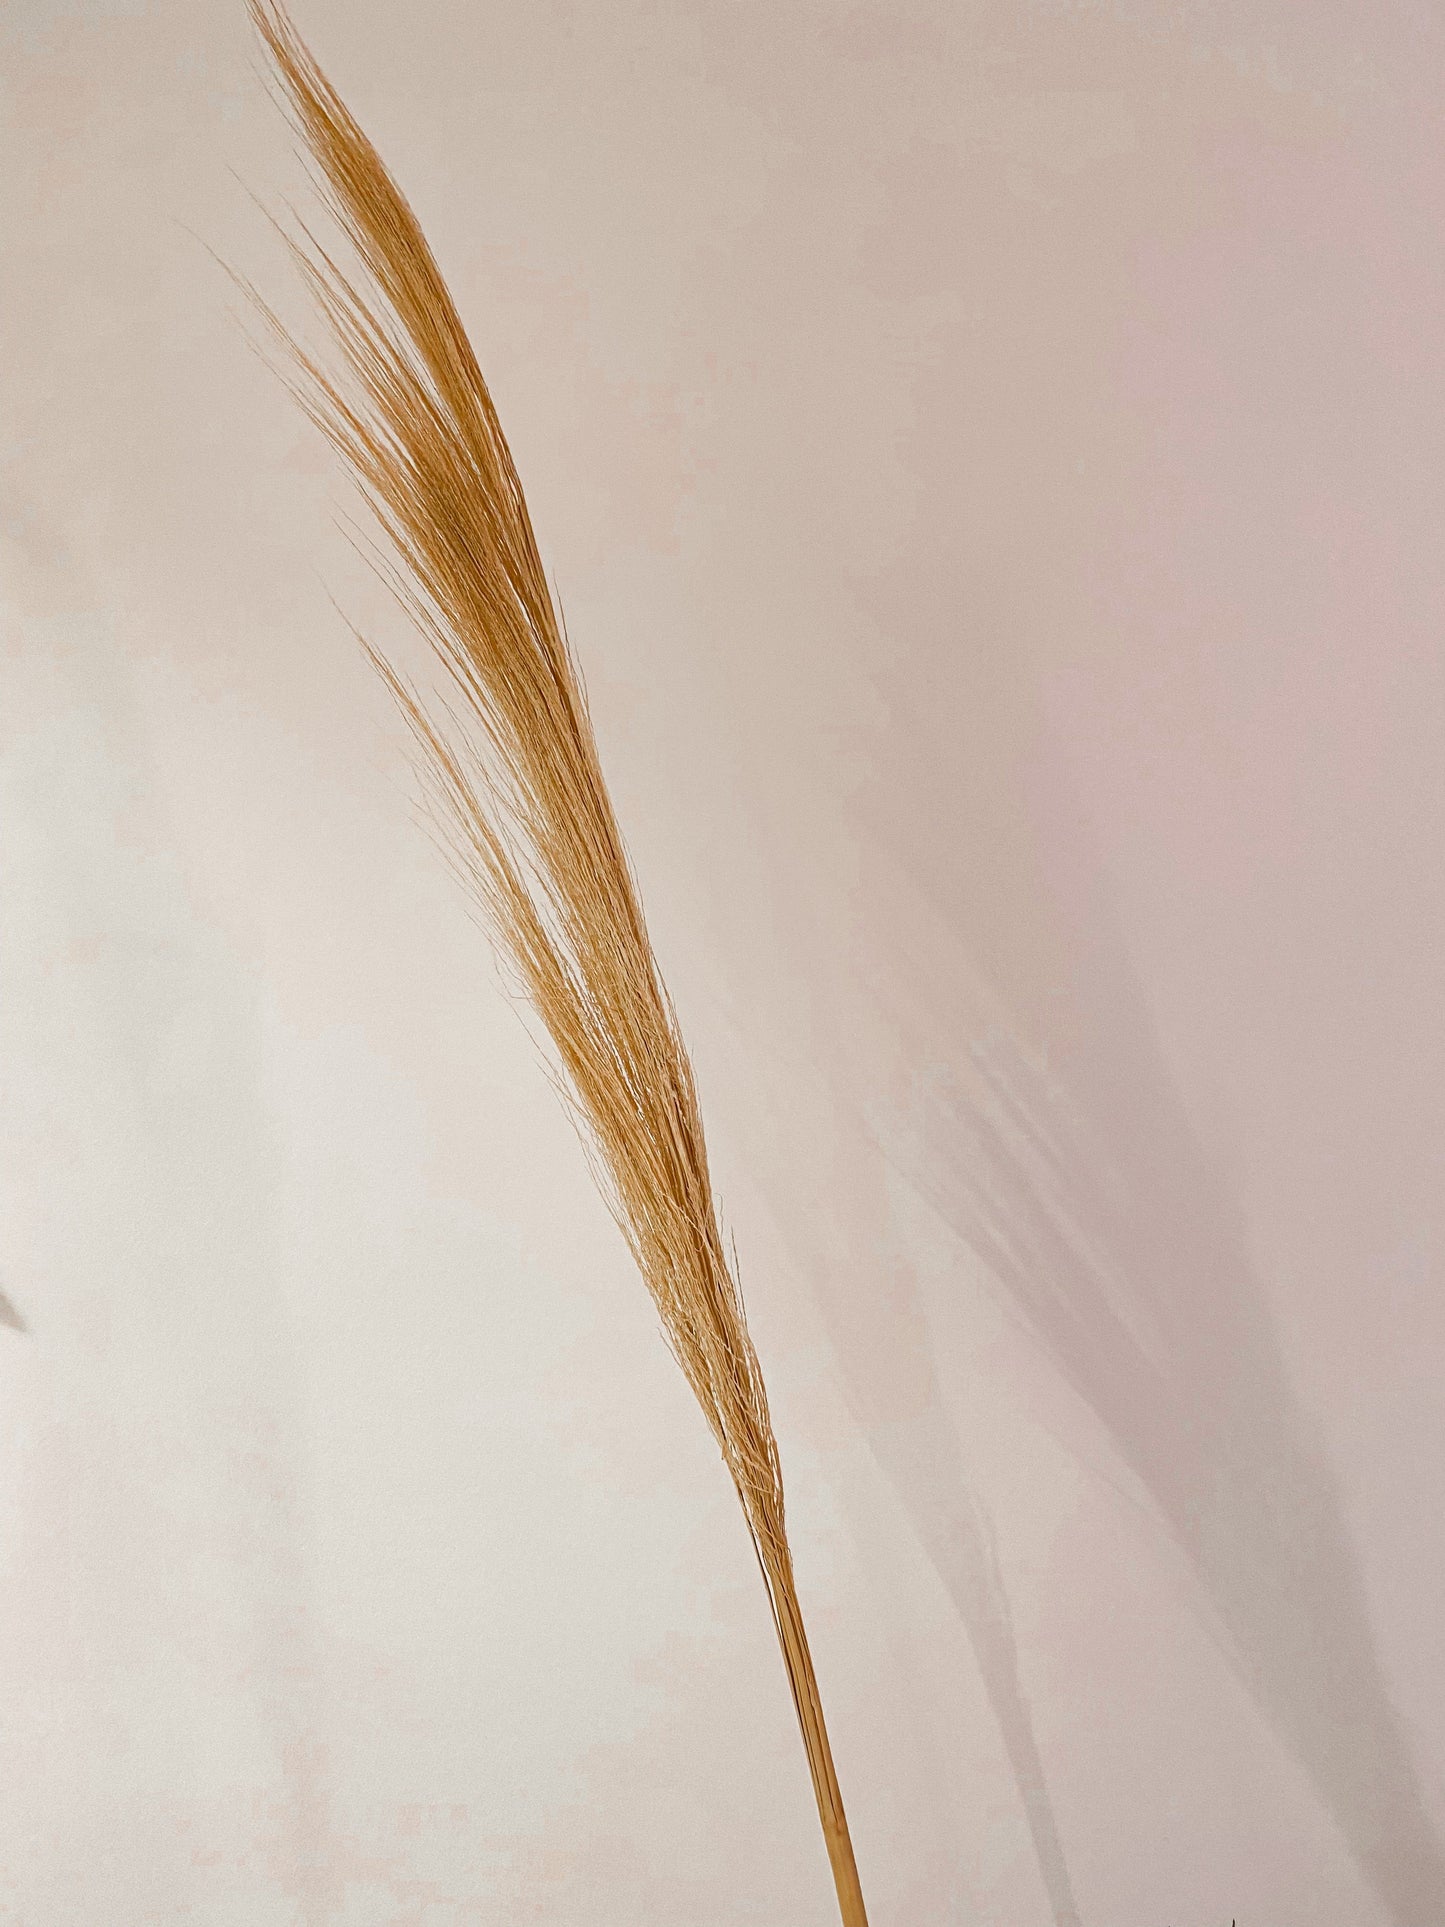 Dried Broom Grass - 4 Stems - Naturverse